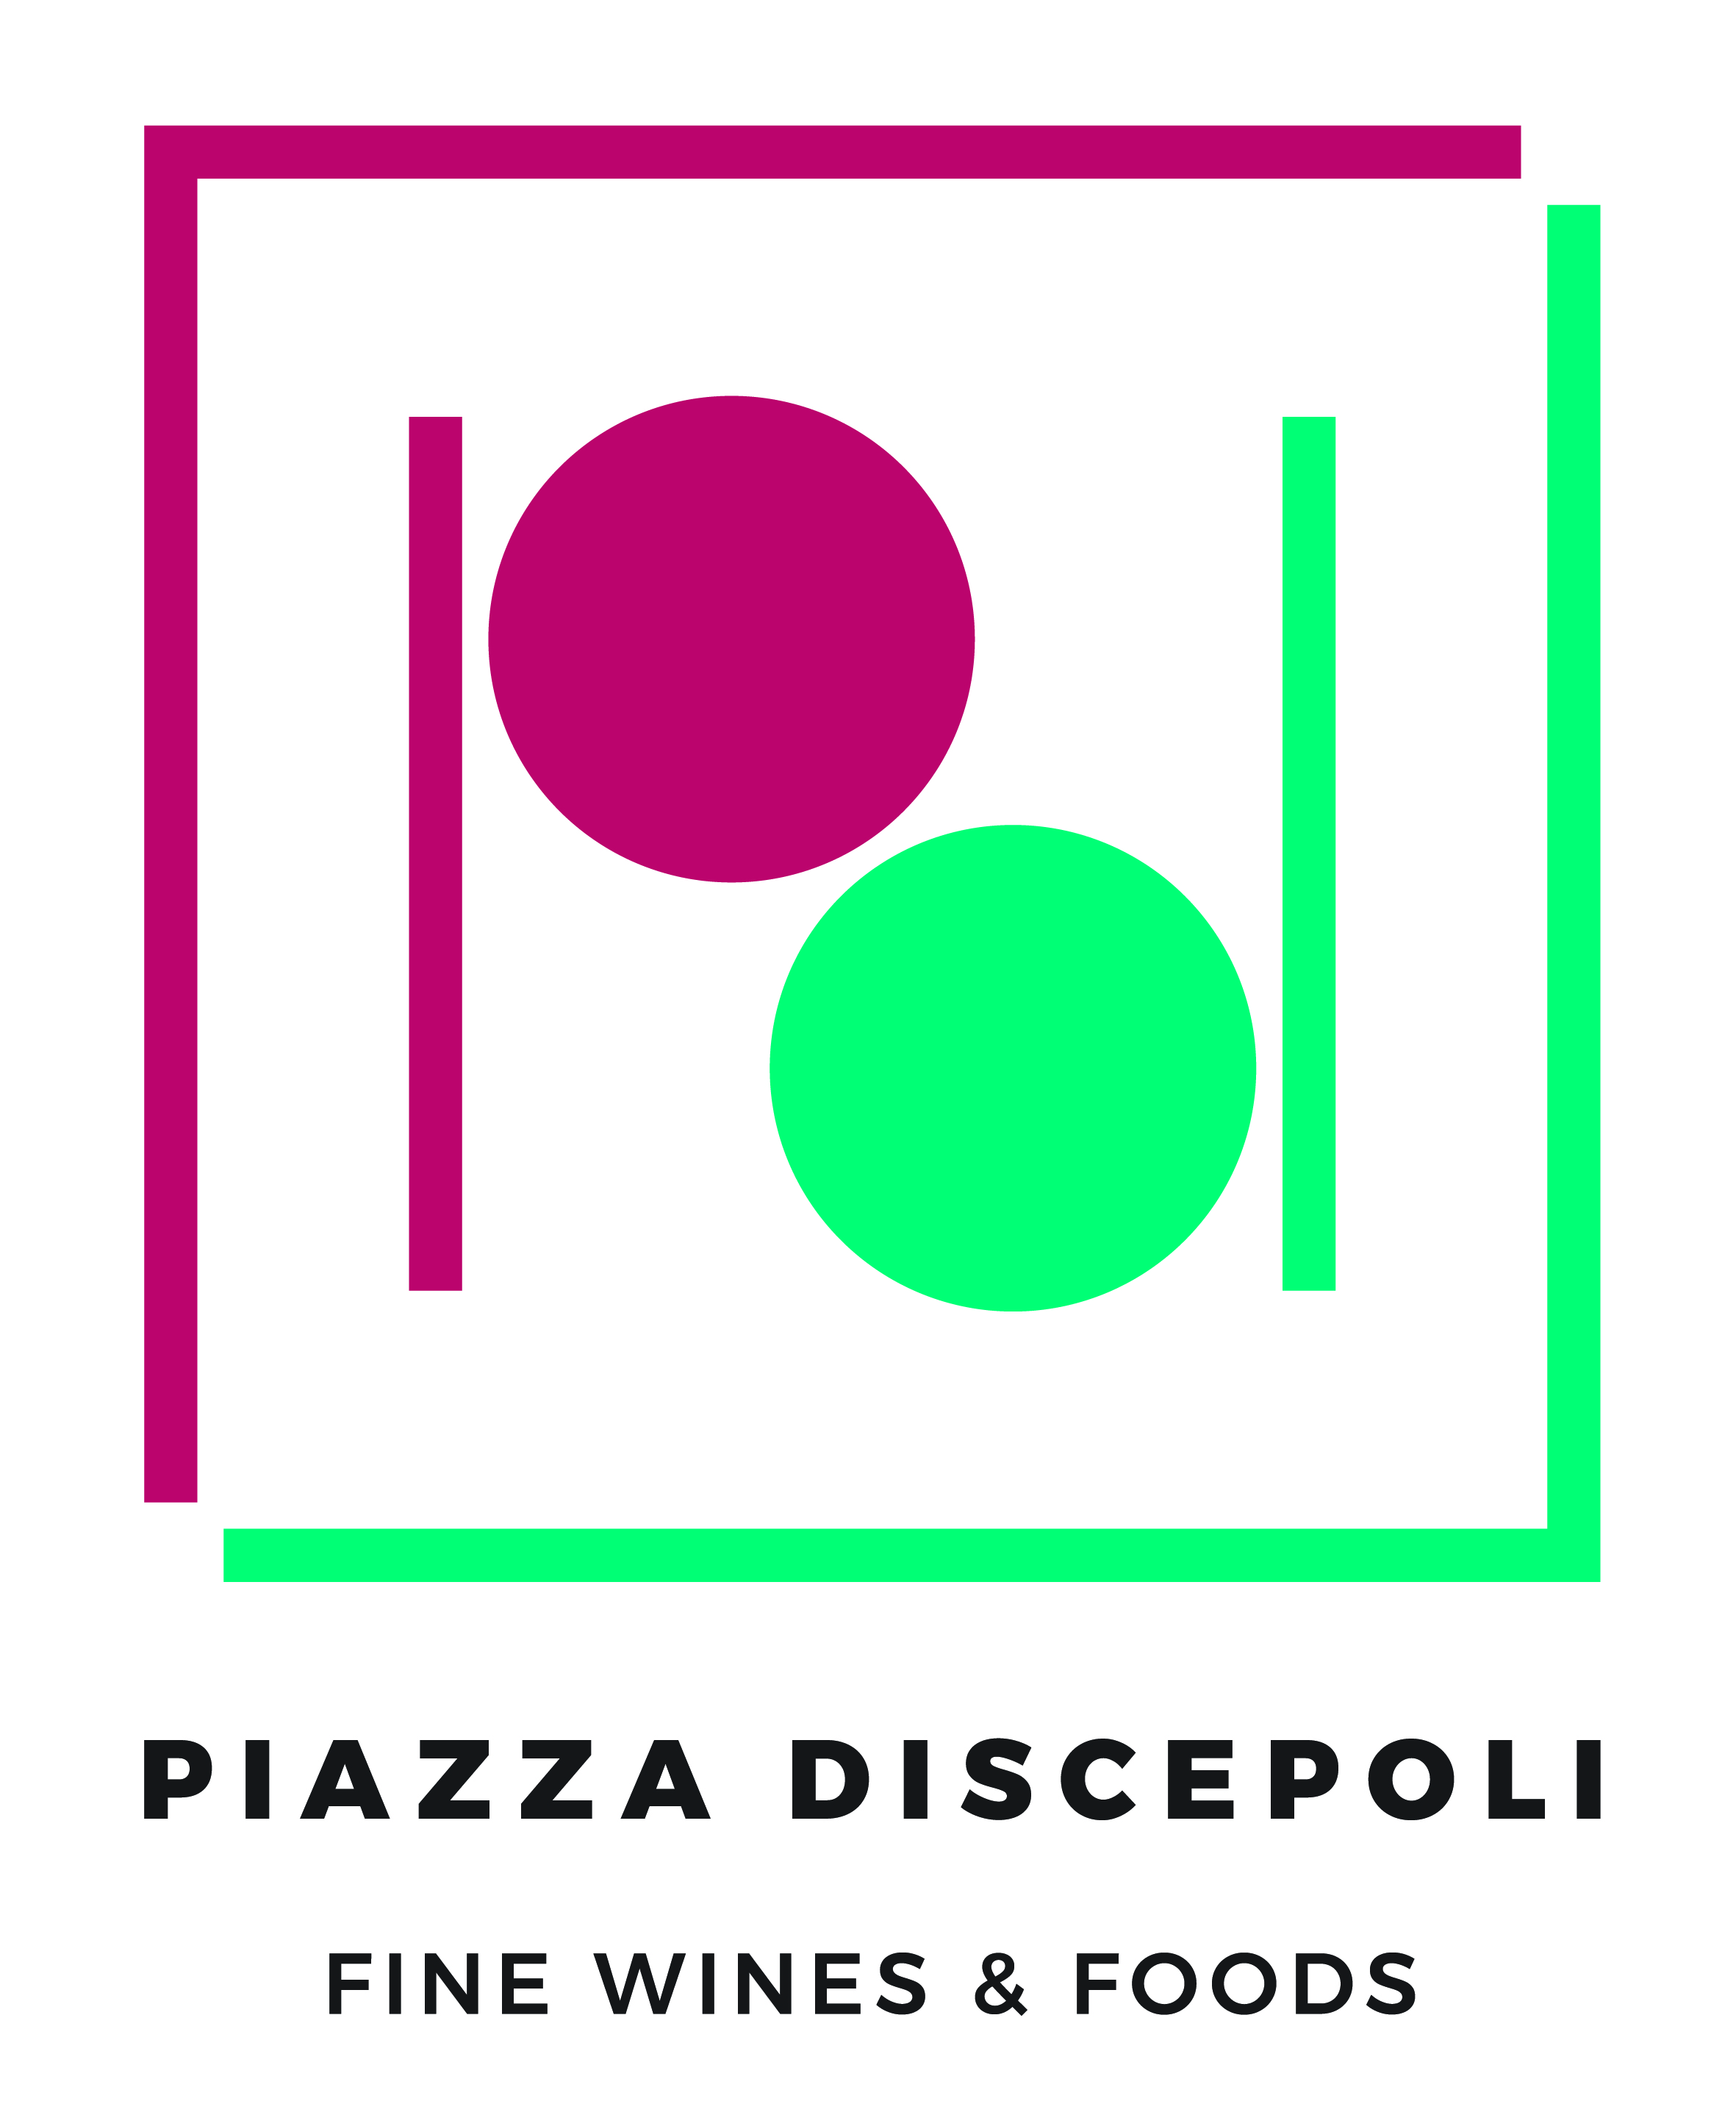 Piazza Discepoli logo